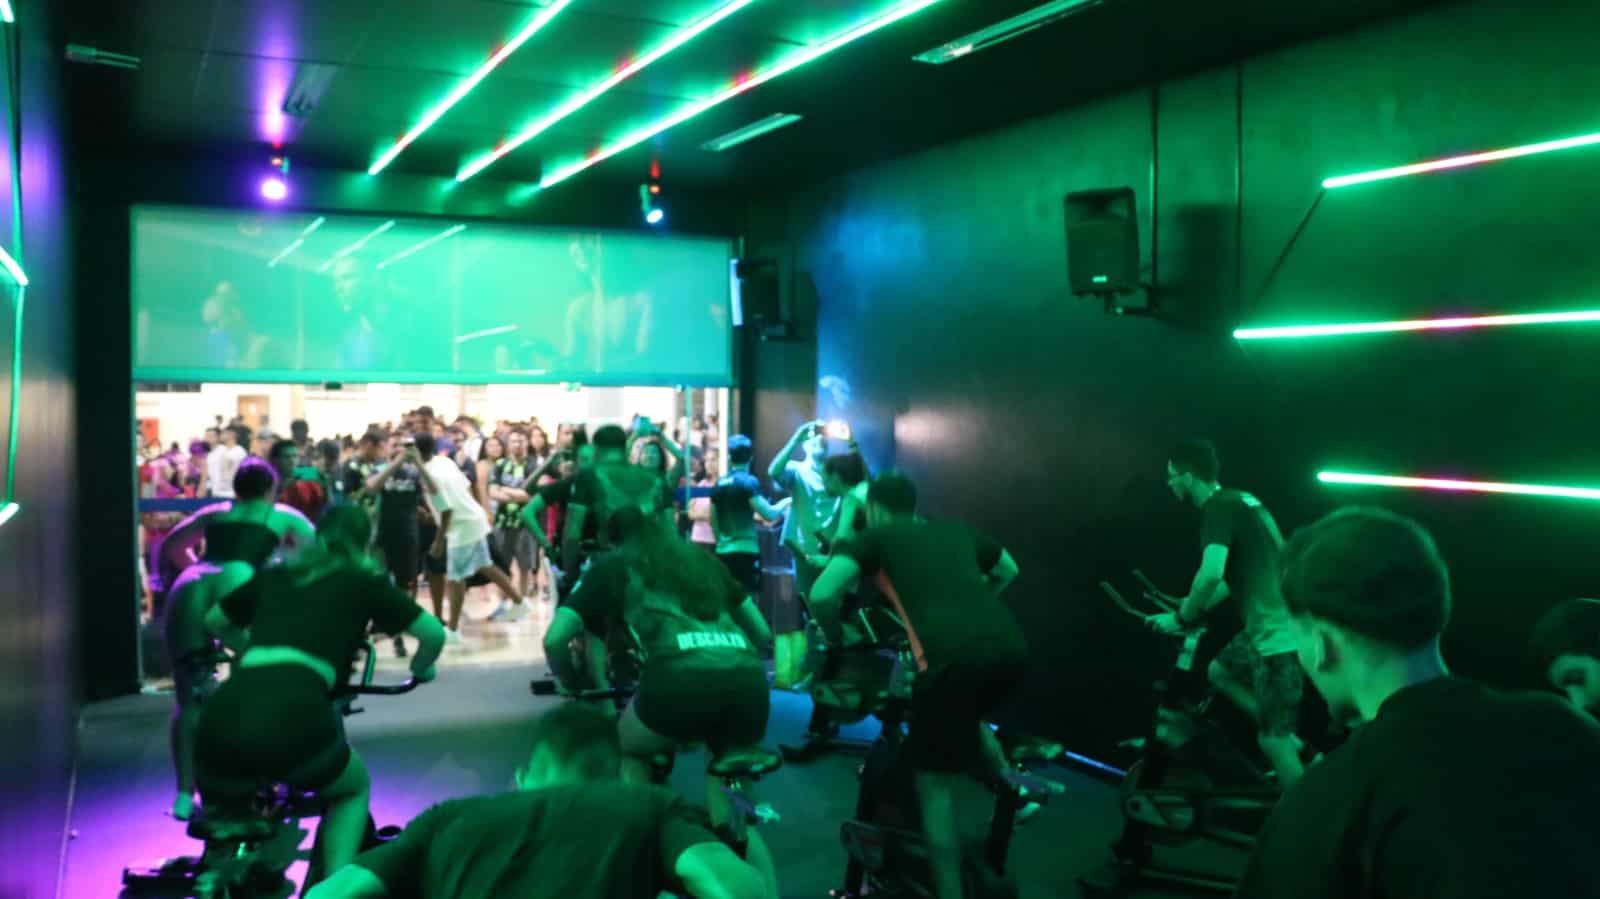 O UniSALESIANO inaugurou a Sala de Spinning, na manhã do dia 20 de setembro, Araçatuba, Brasil